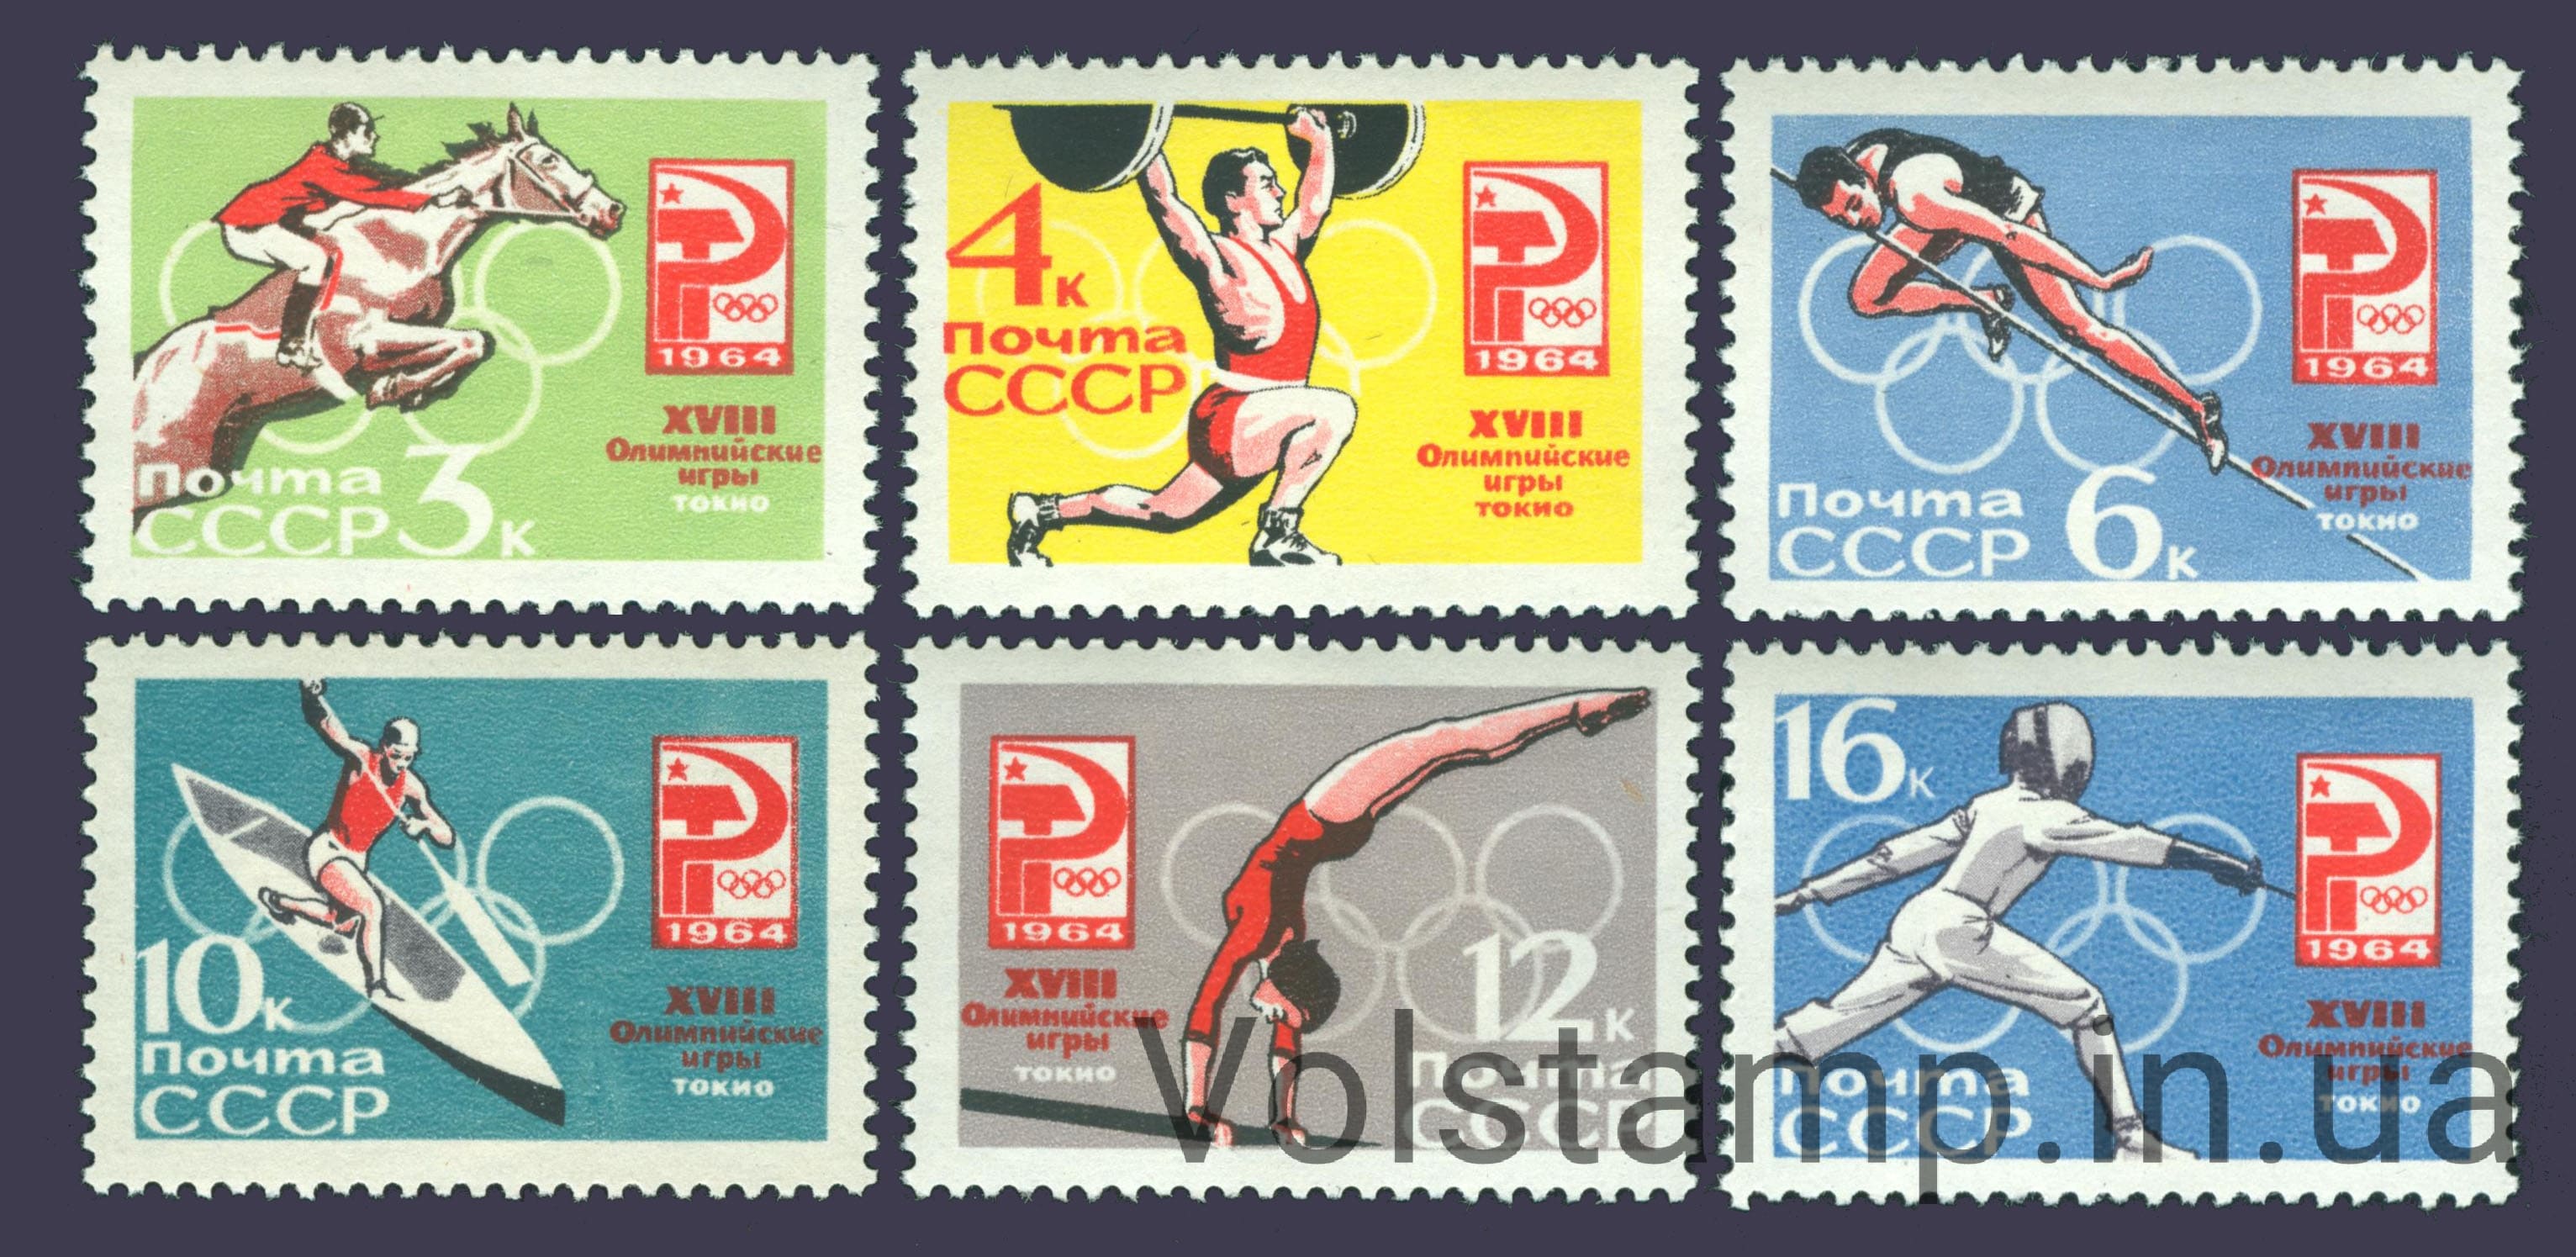 1964 series of stamps XVIII Olympic Games (Tokyo, Japan) №2987-2992